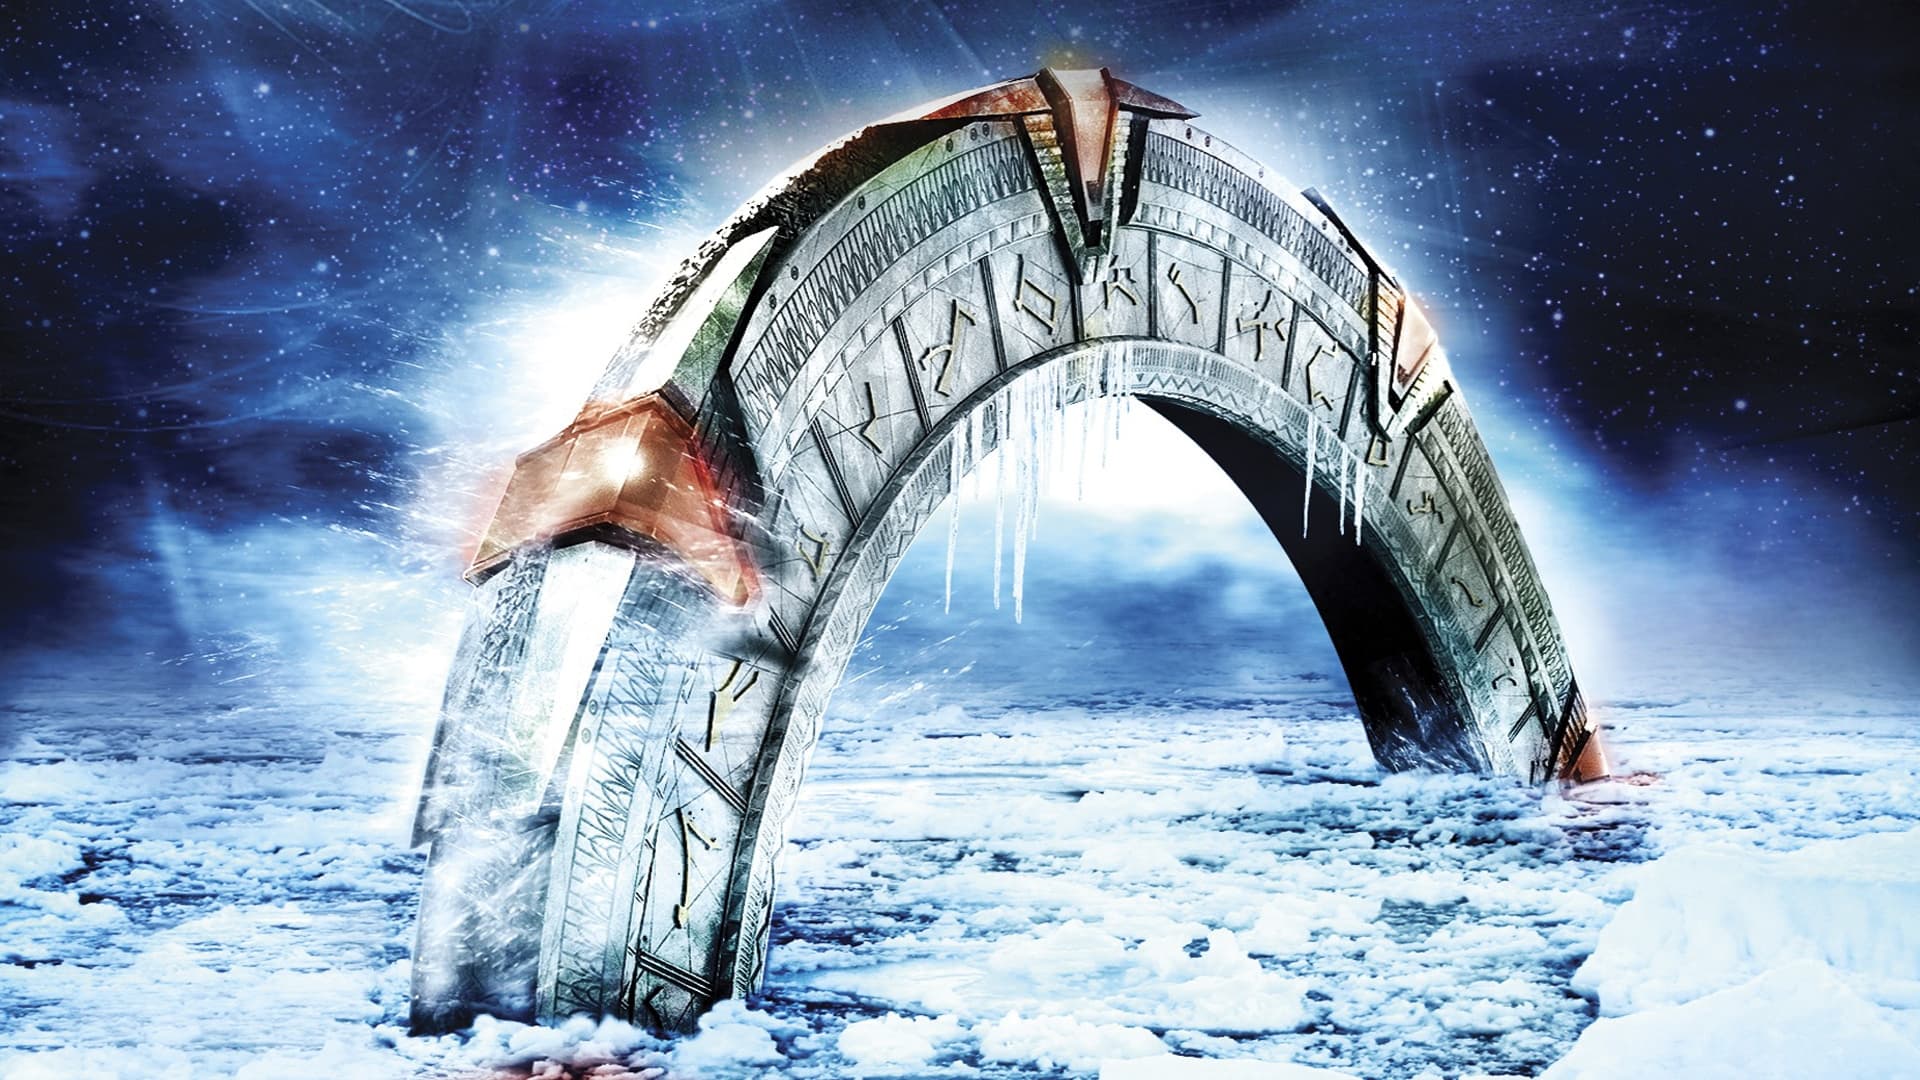 Poster Phim Cổng Trời (Stargate: Continuum)